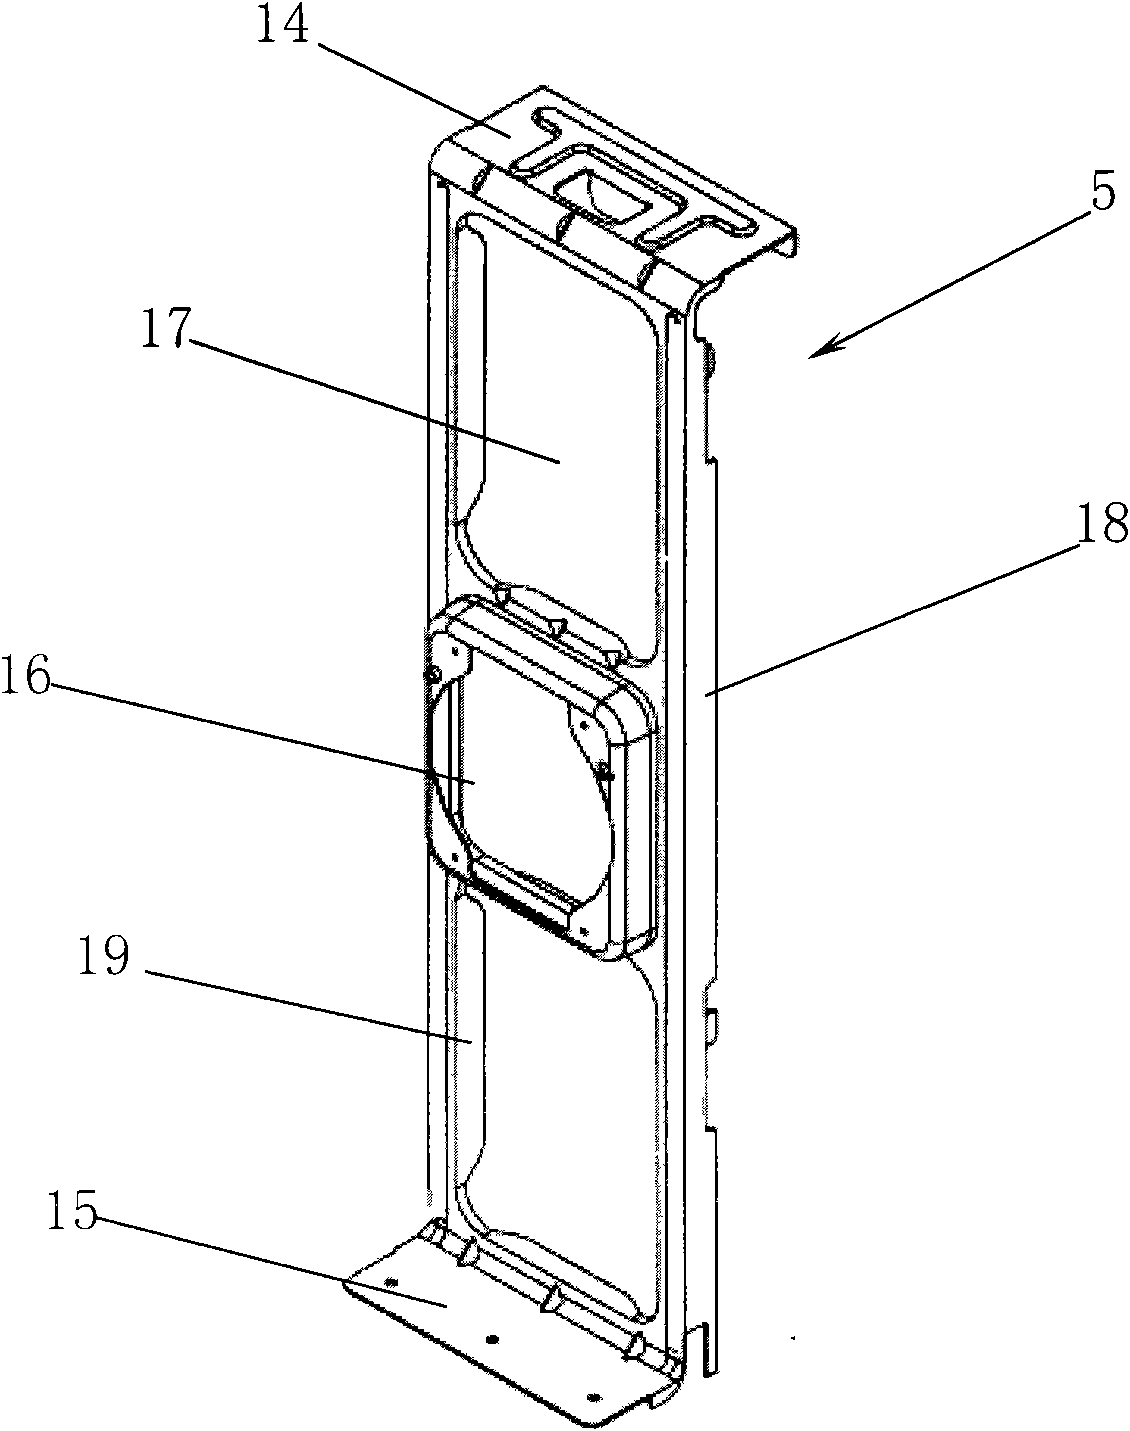 Motor bracket of air conditioner outdoor unit